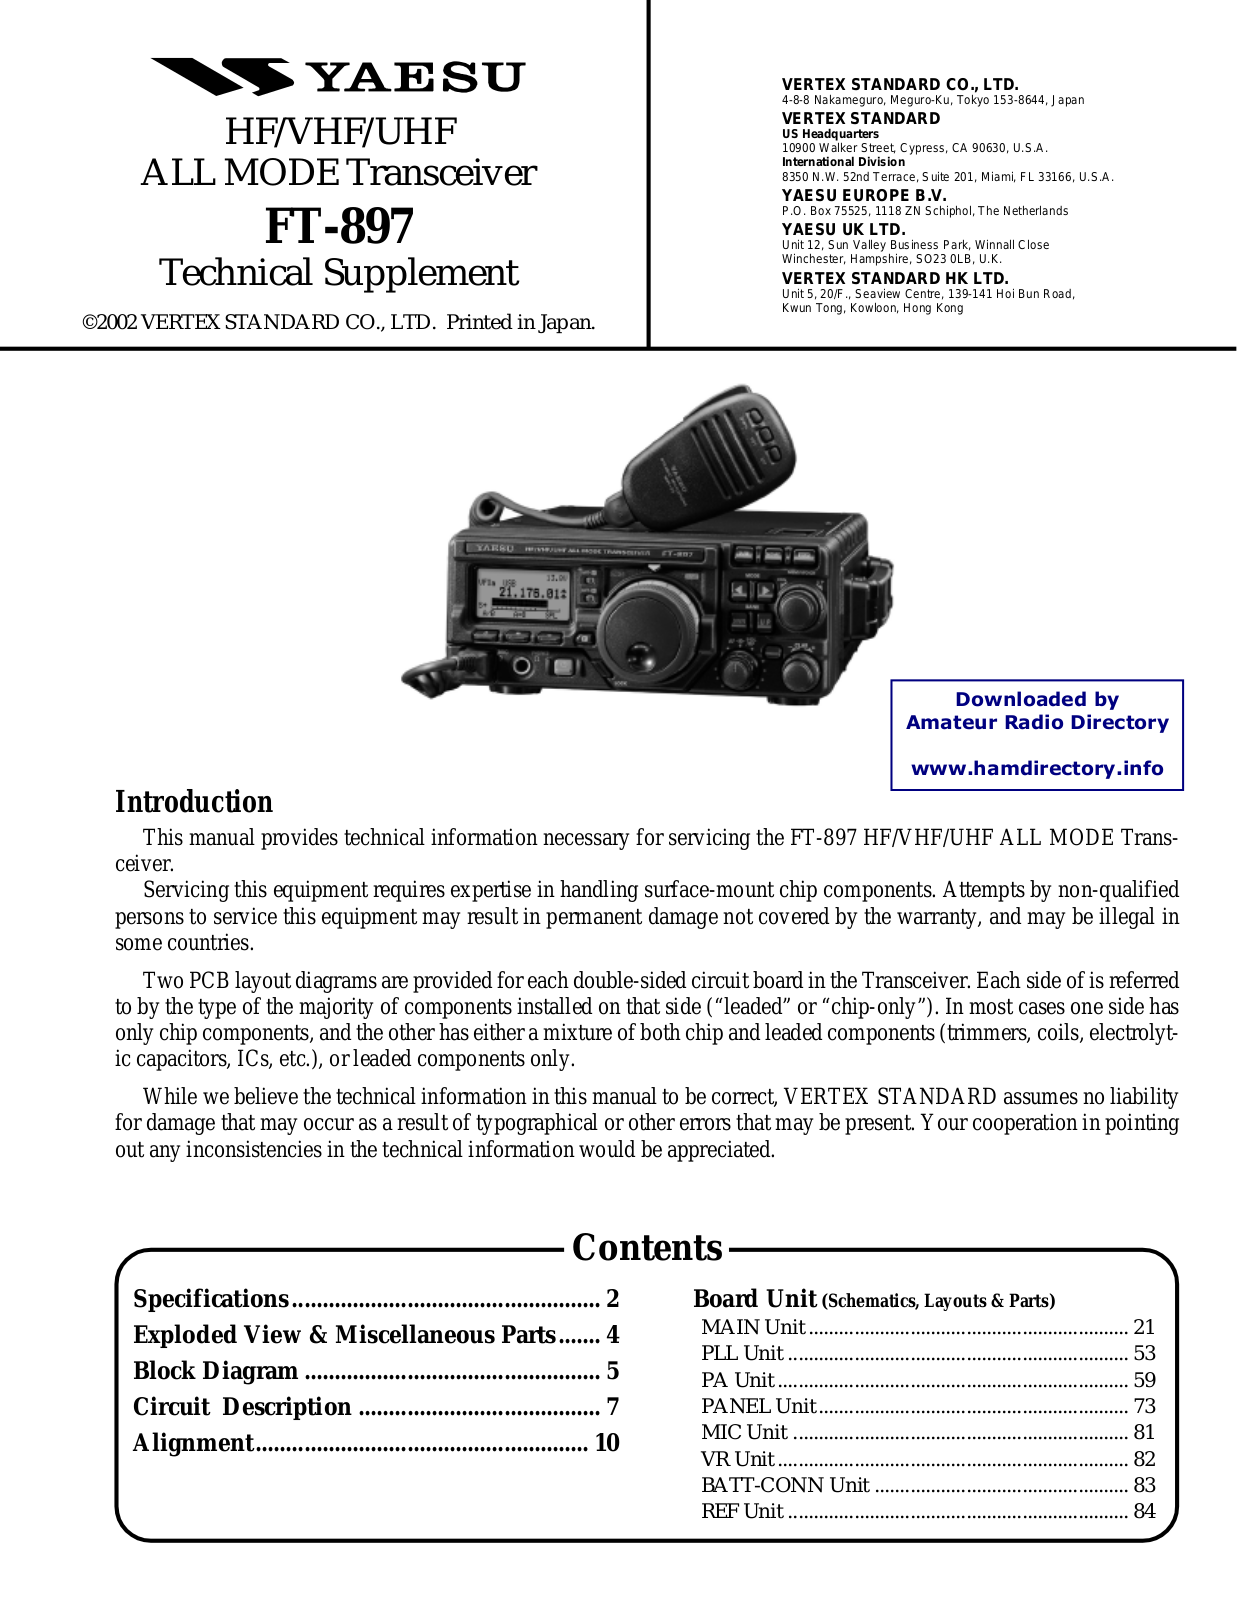 Yaesu FT-897SM Service Manual